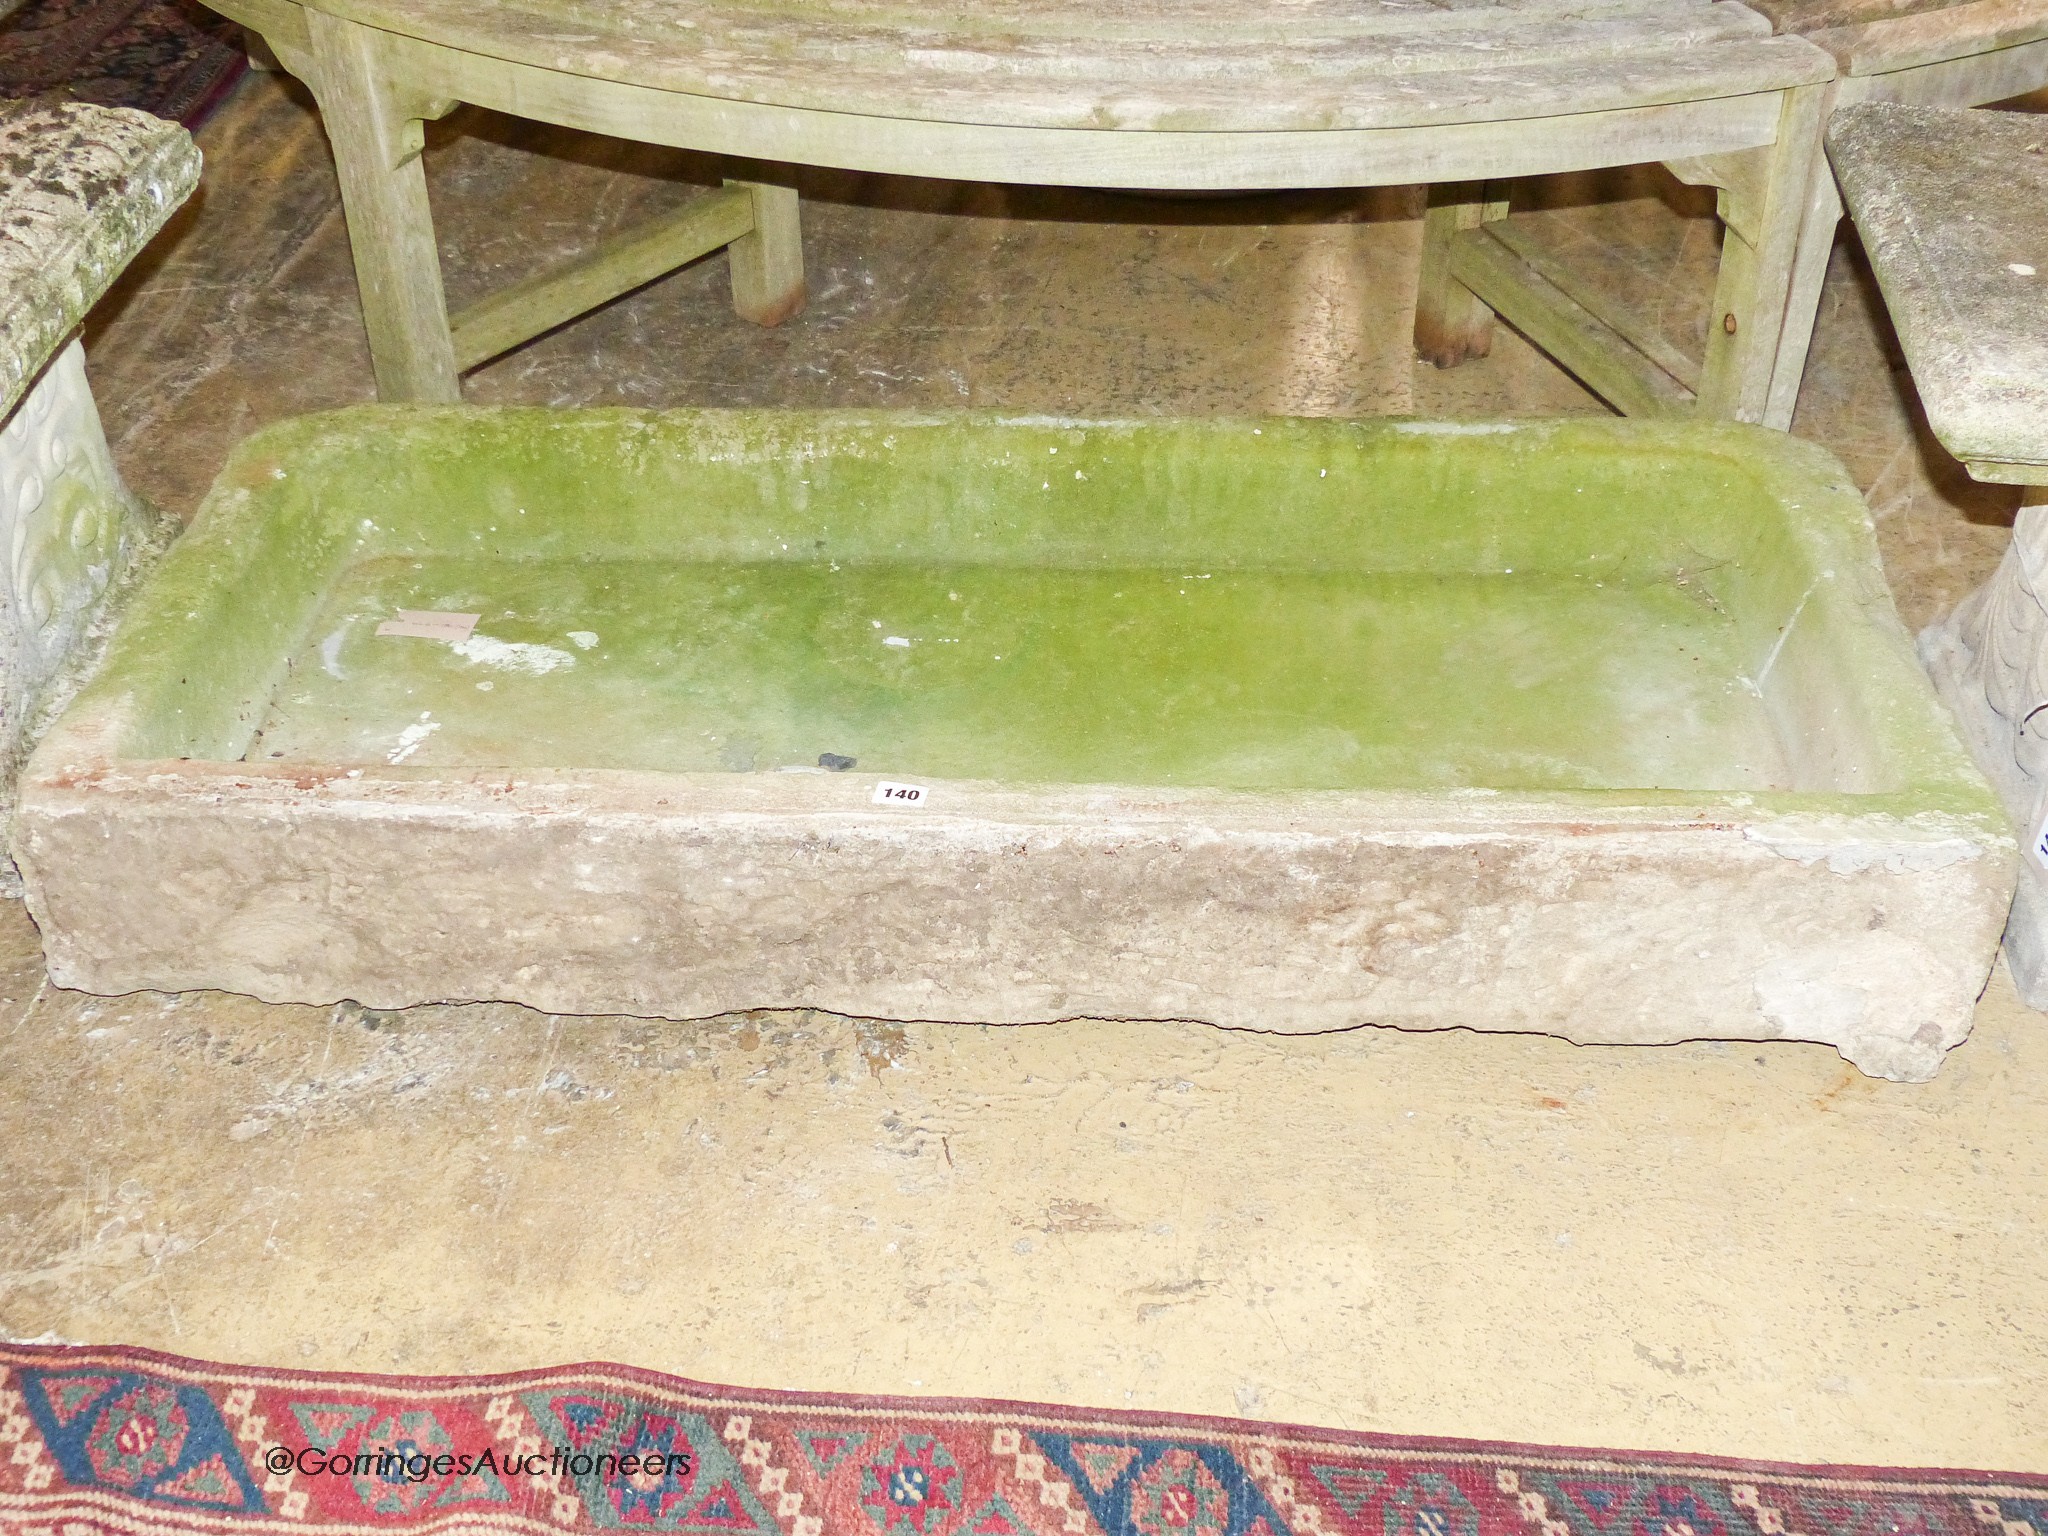 A large stone sink, width 120cm, depth 53cm, height 18cm